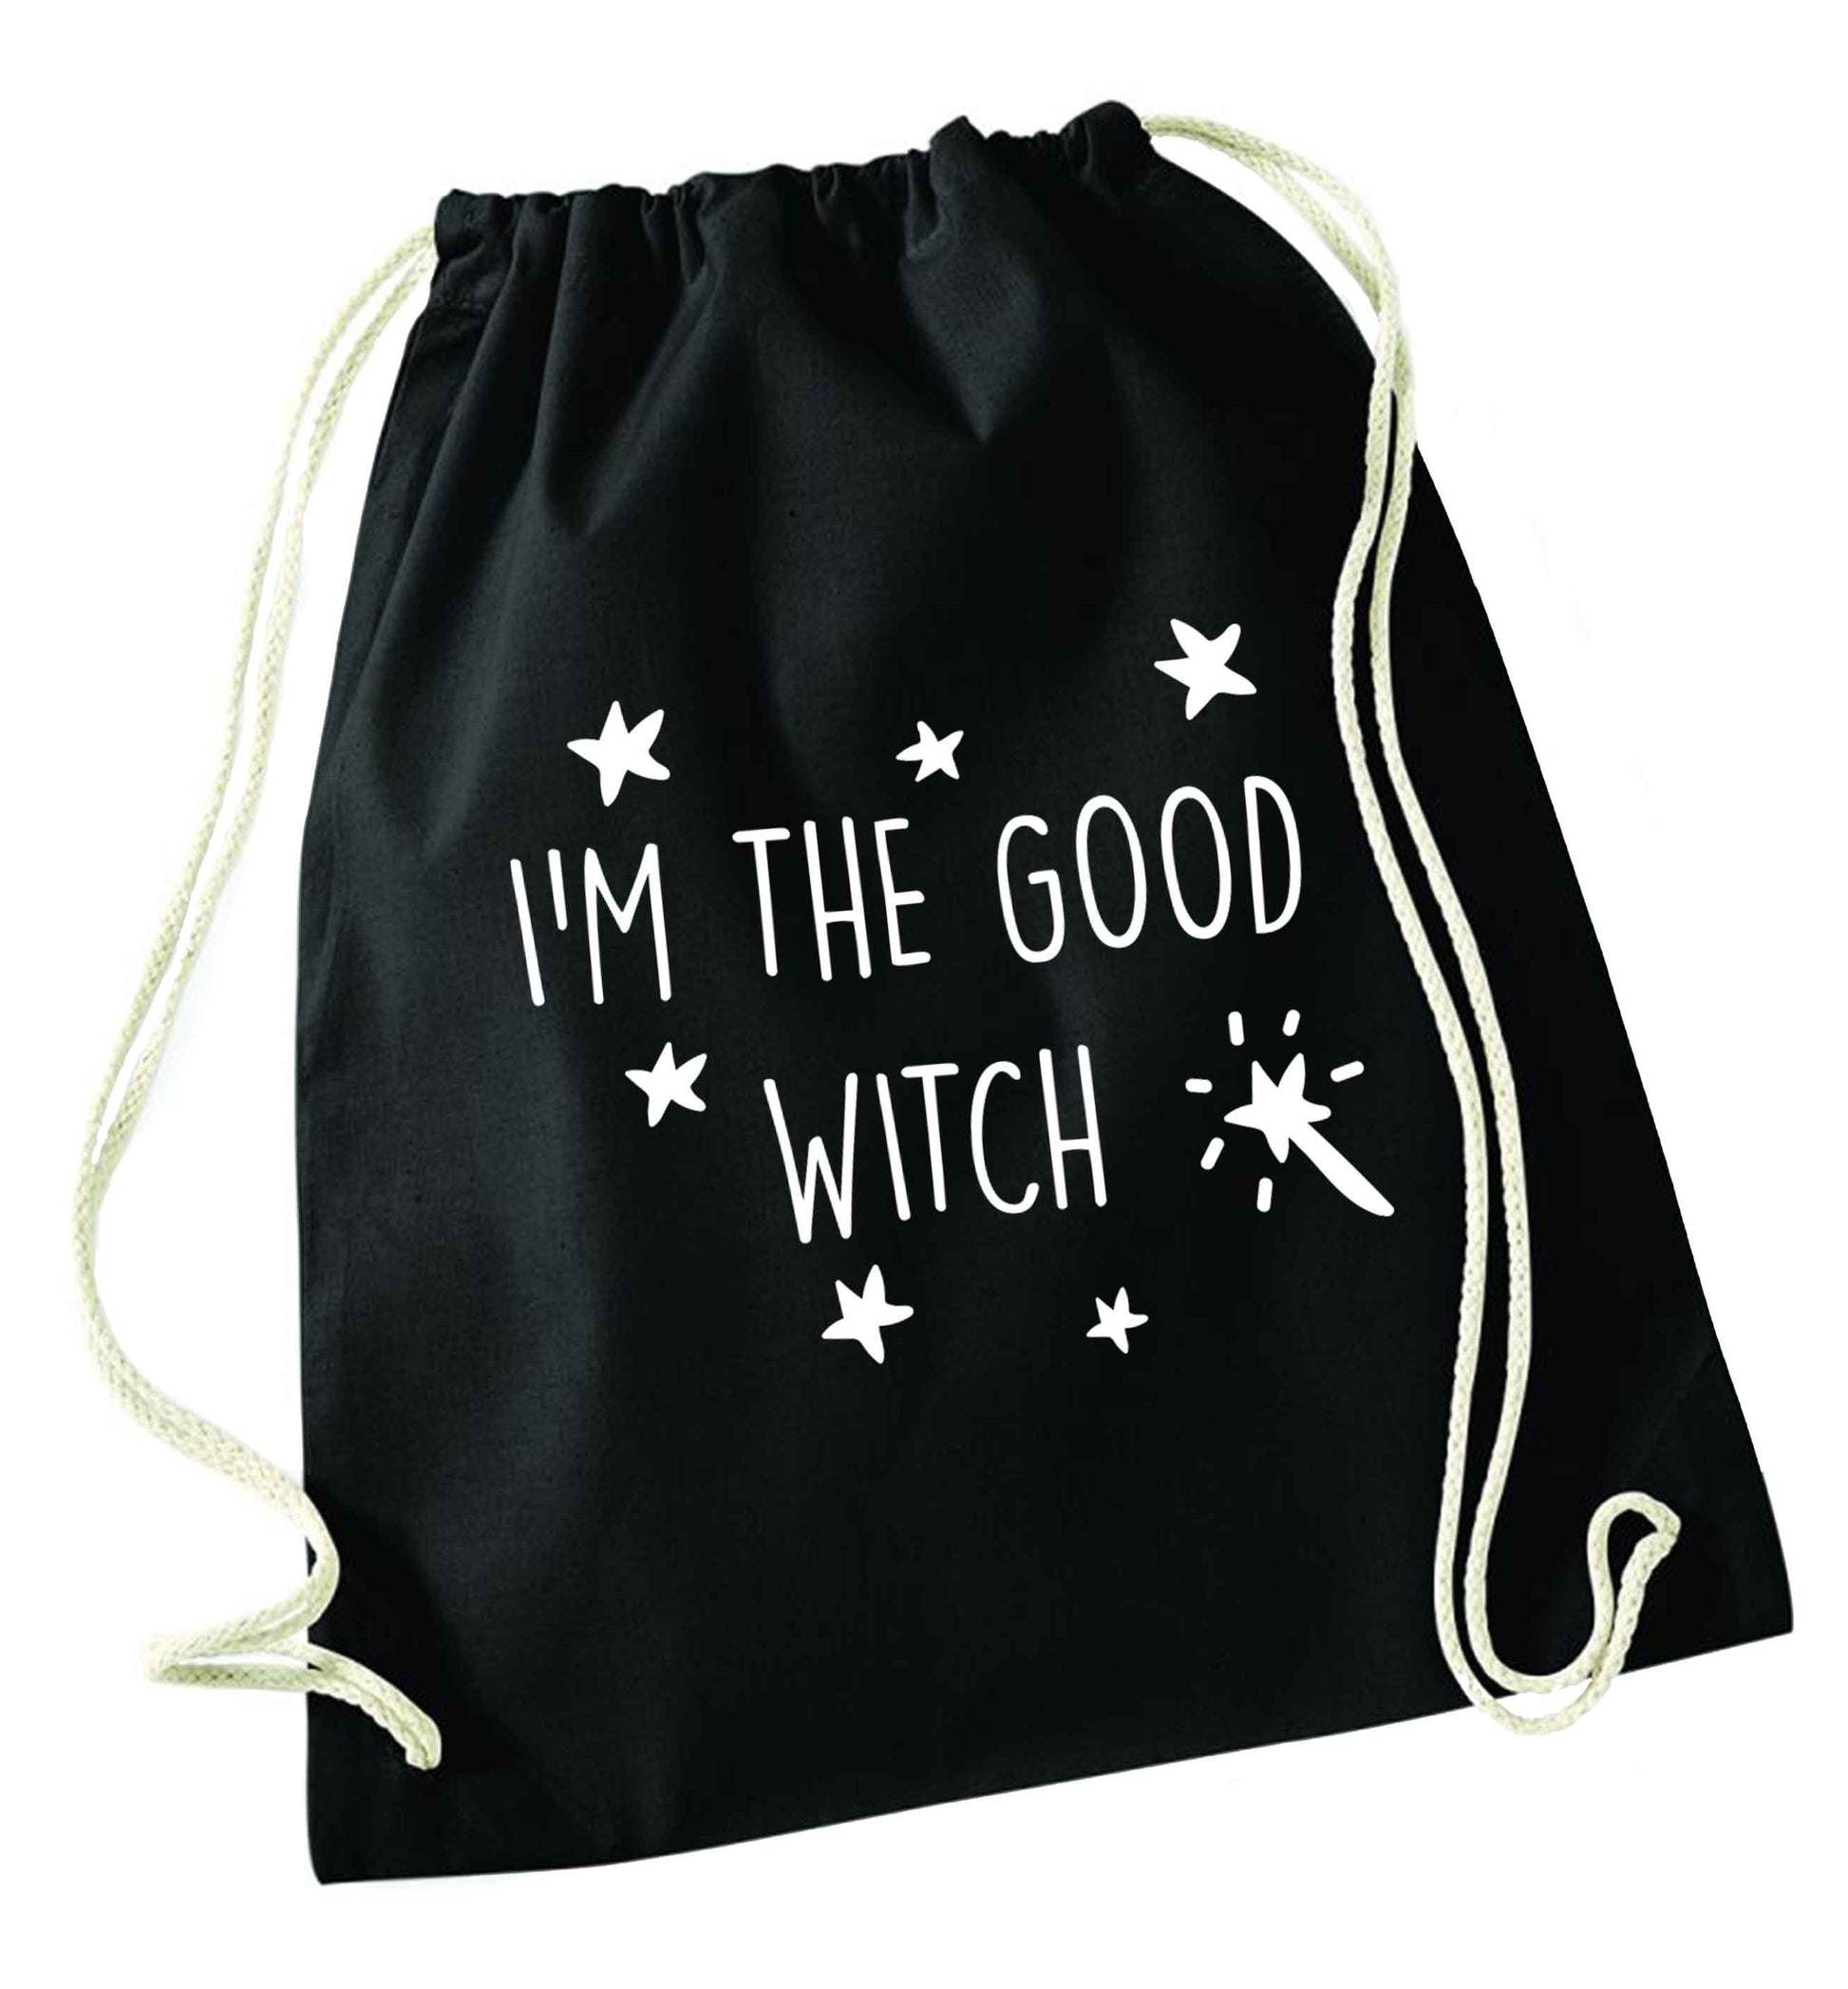 Good witch black drawstring bag